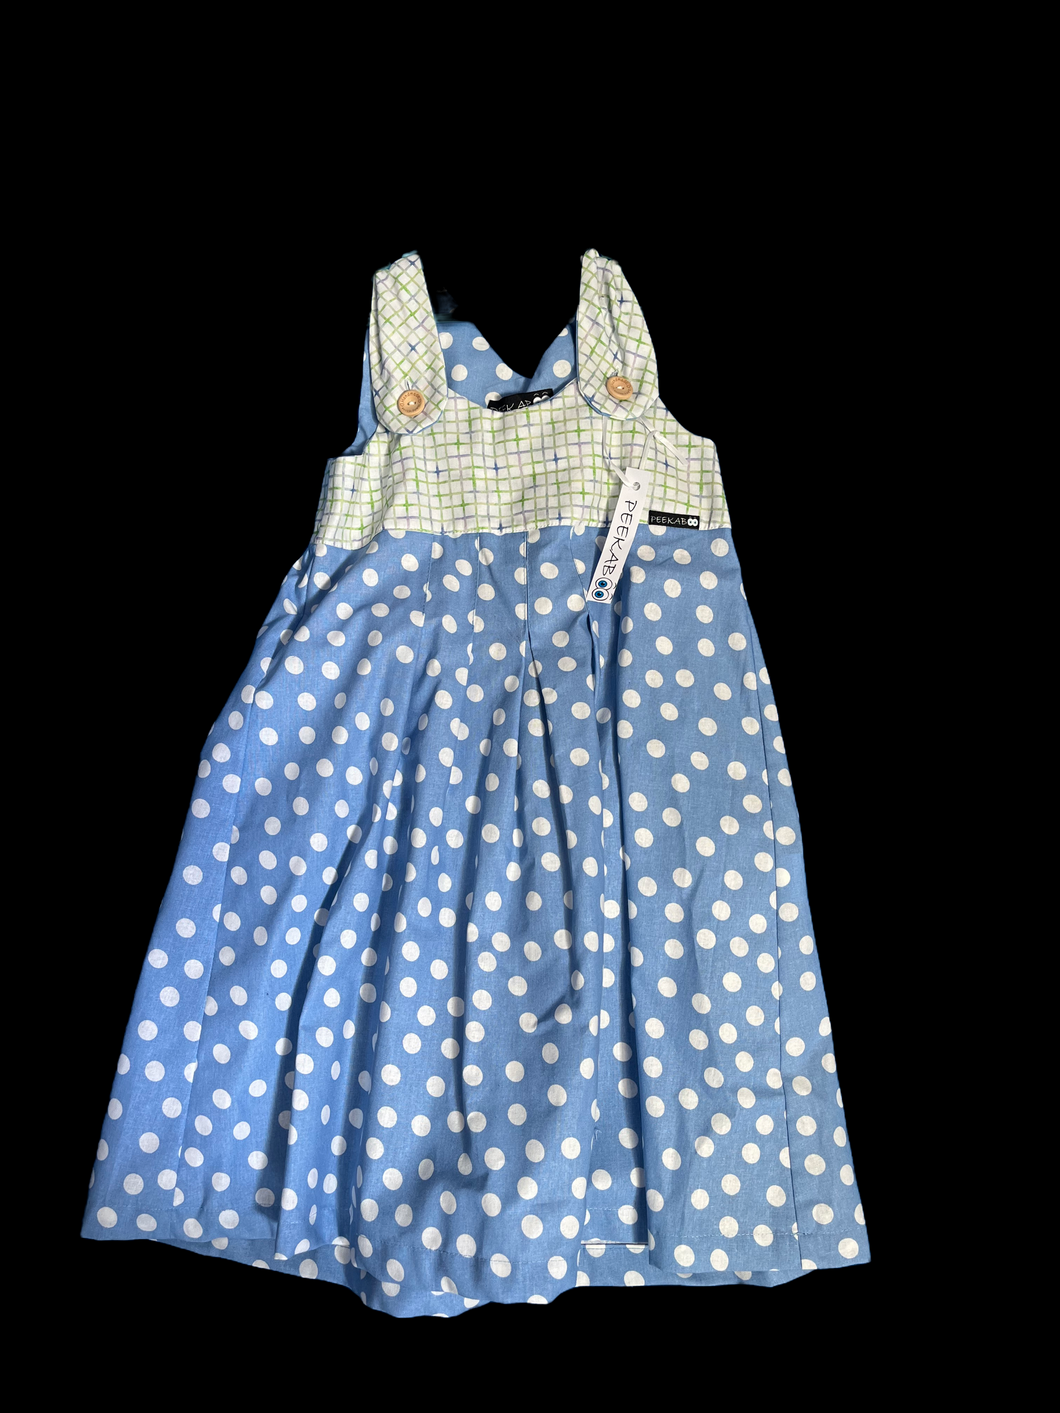 Blue polka dot dress (size 6)